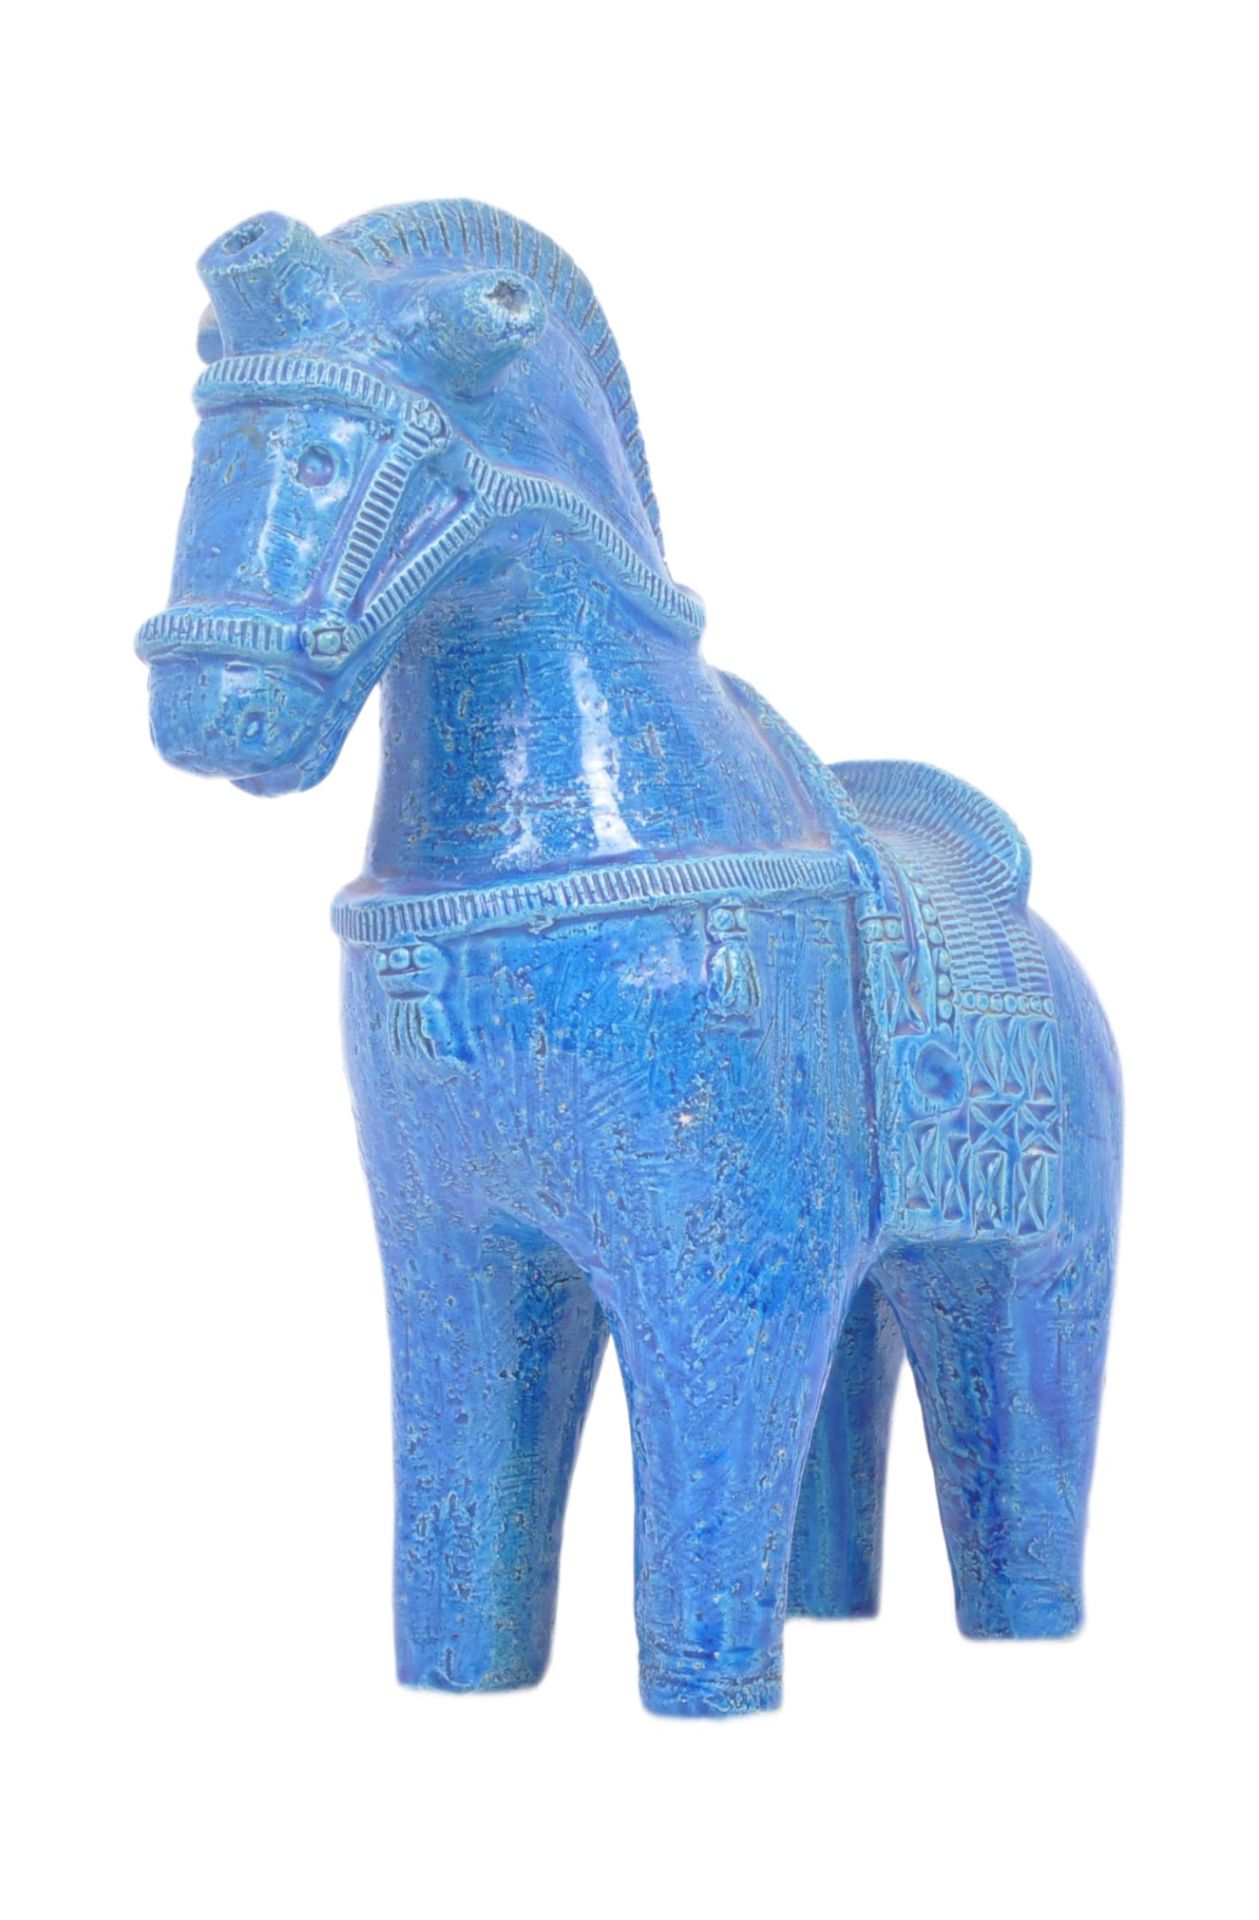 ALDO LONDI - BITOSSI - ITALIAN BLUE GLAZED ART POTTERY HORSE - Image 2 of 9